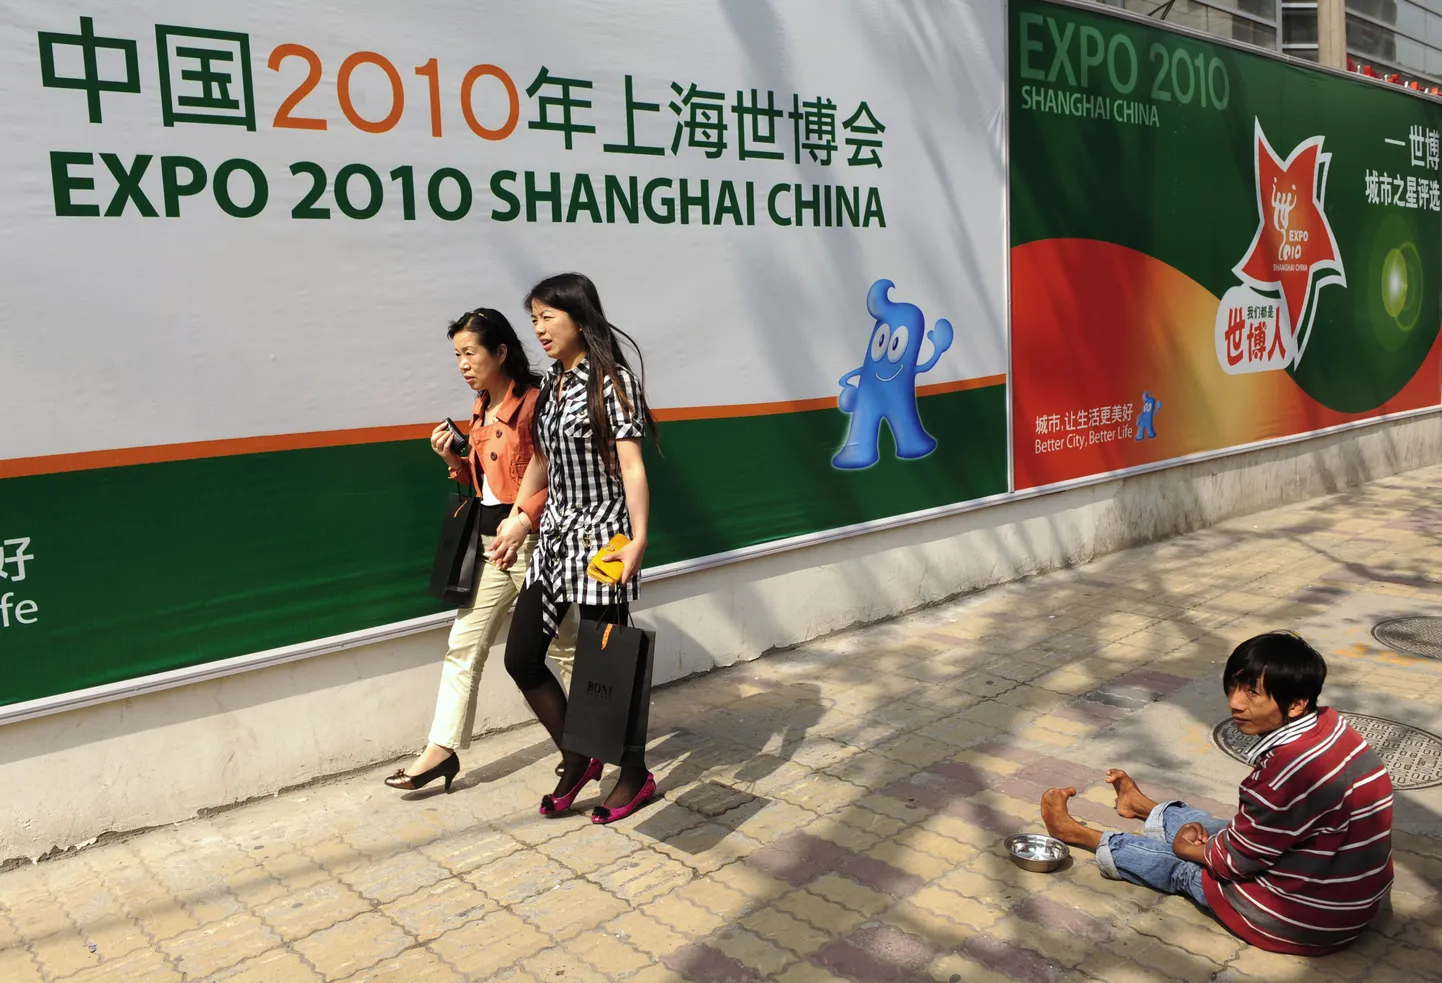 EXPO reklaam Shanghais.